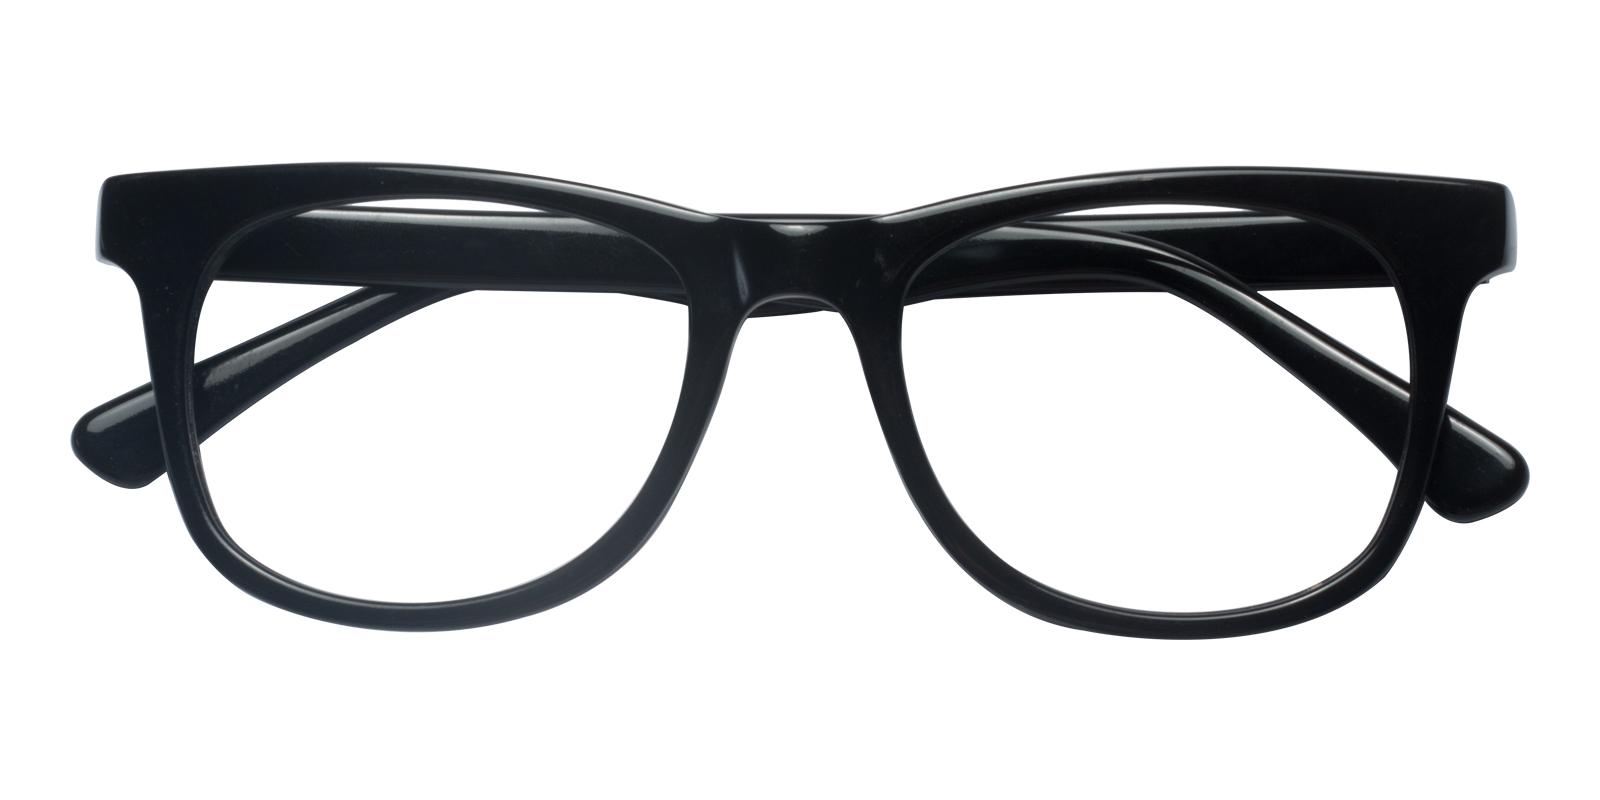 Standie Black Acetate Eyeglasses , UniversalBridgeFit Frames from ABBE Glasses